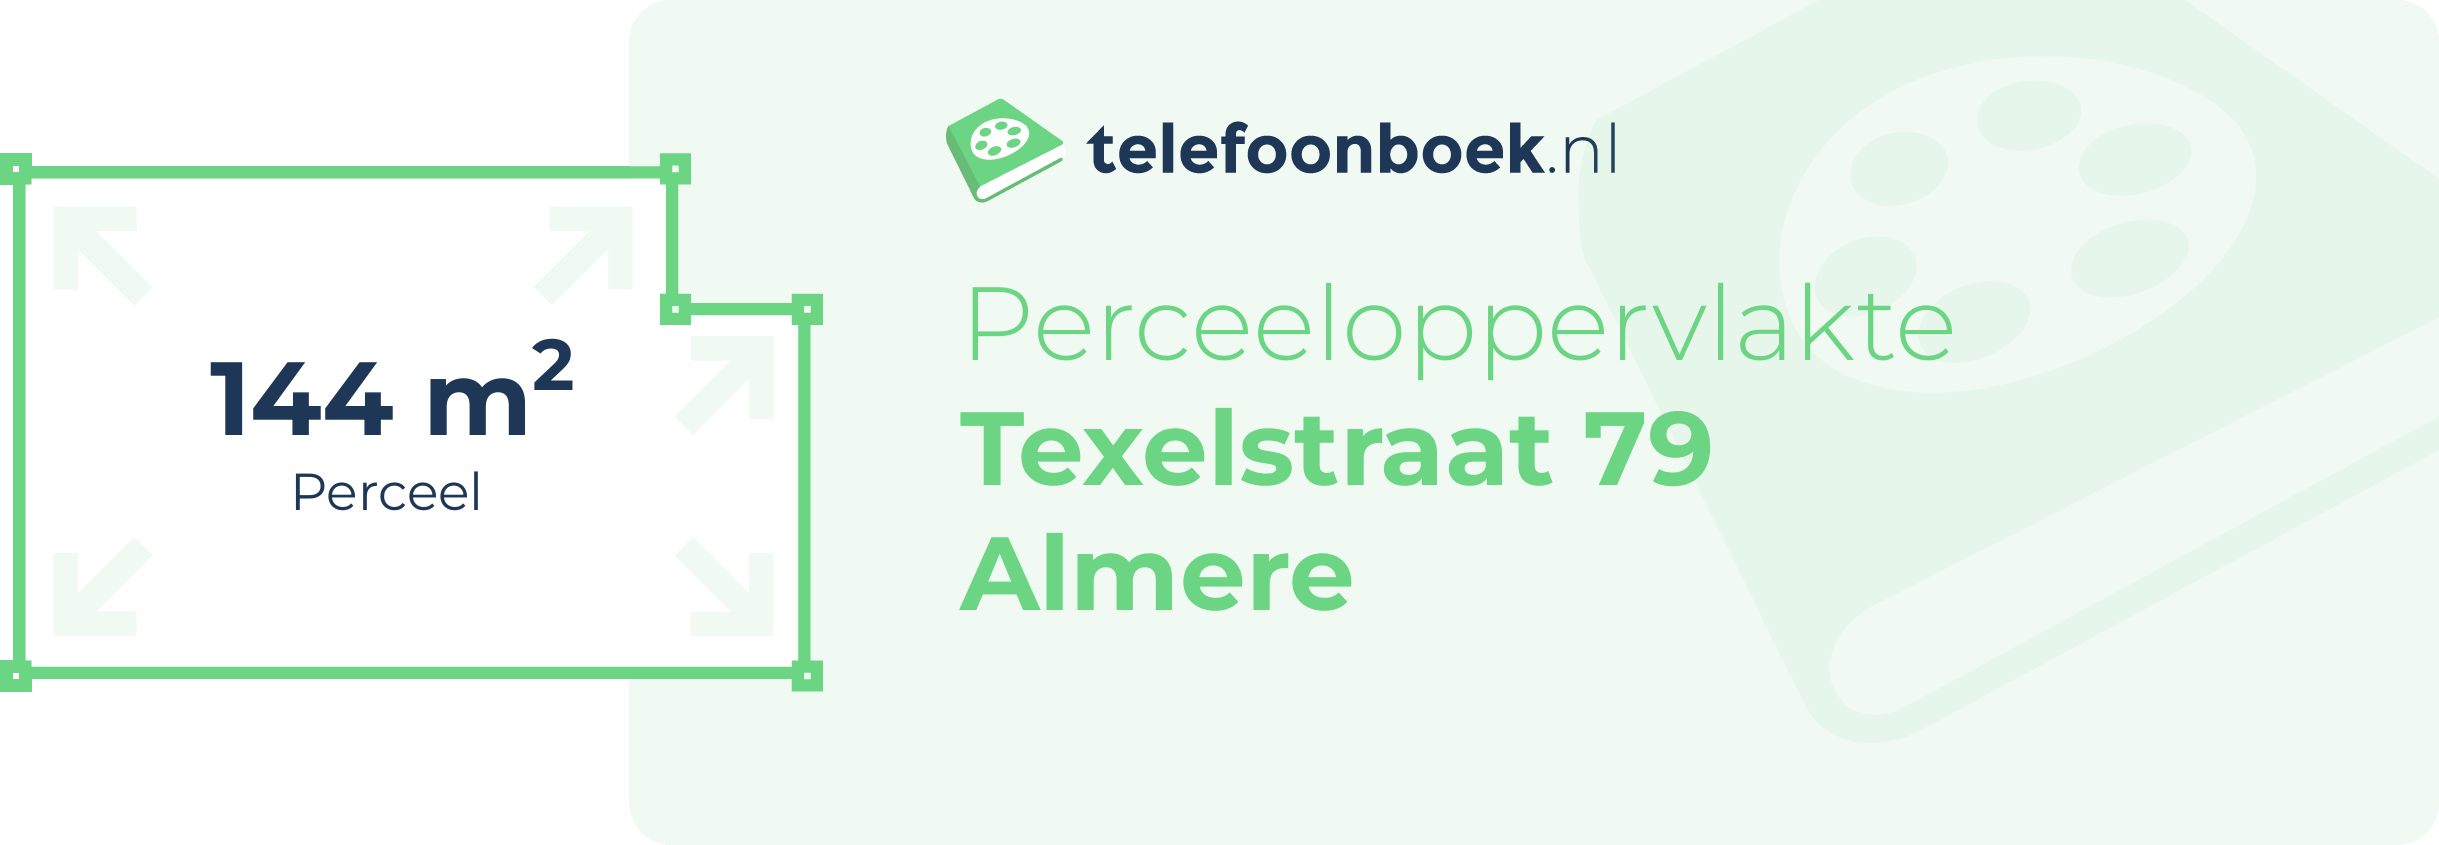 Perceeloppervlakte Texelstraat 79 Almere